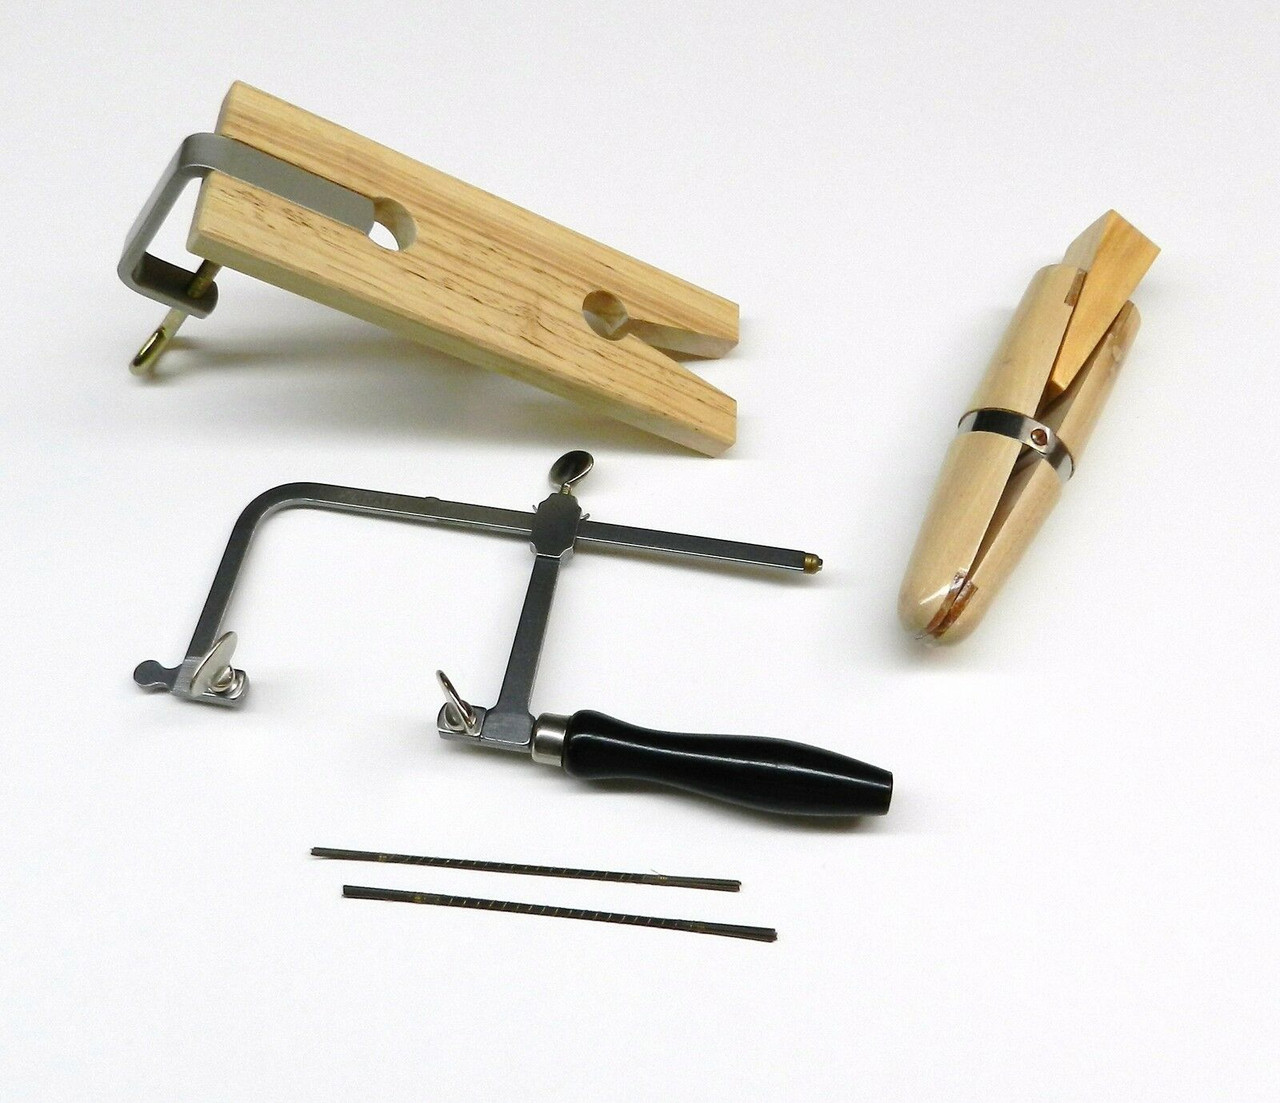 Basic Jewelry Making Tool Kit